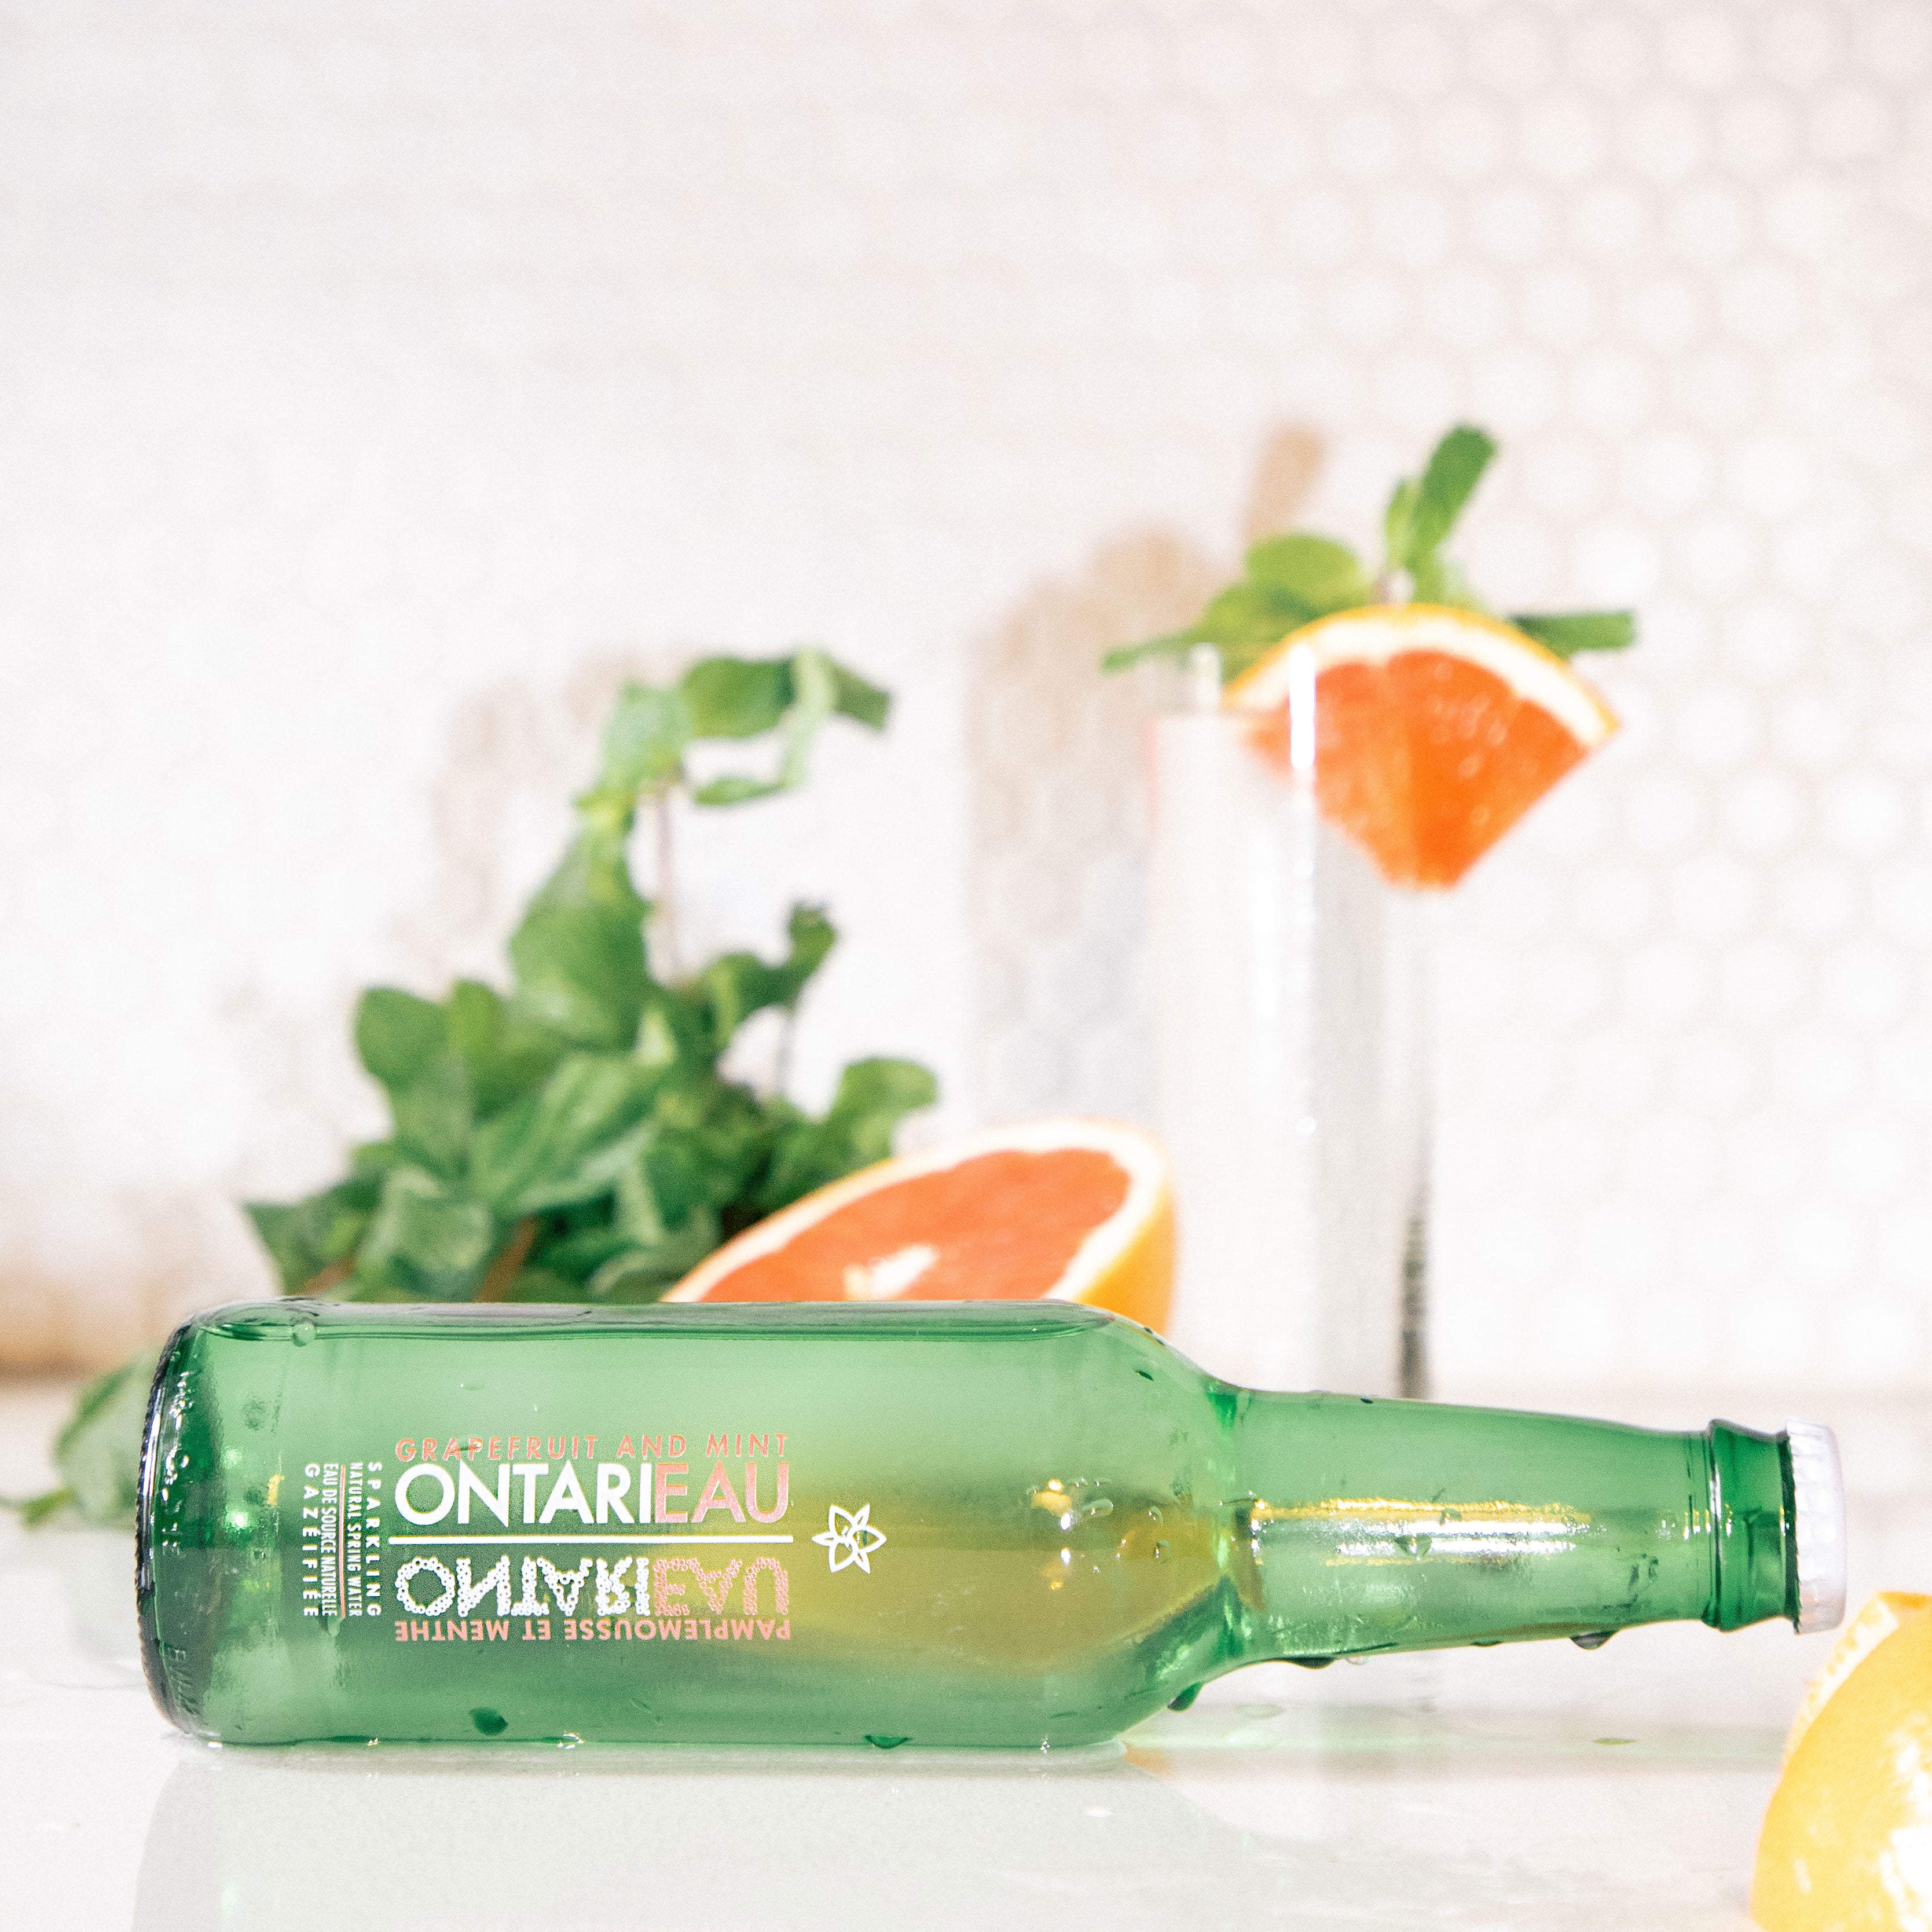 Grapefruit & Mint Ontarieau Sparkling Spring Water